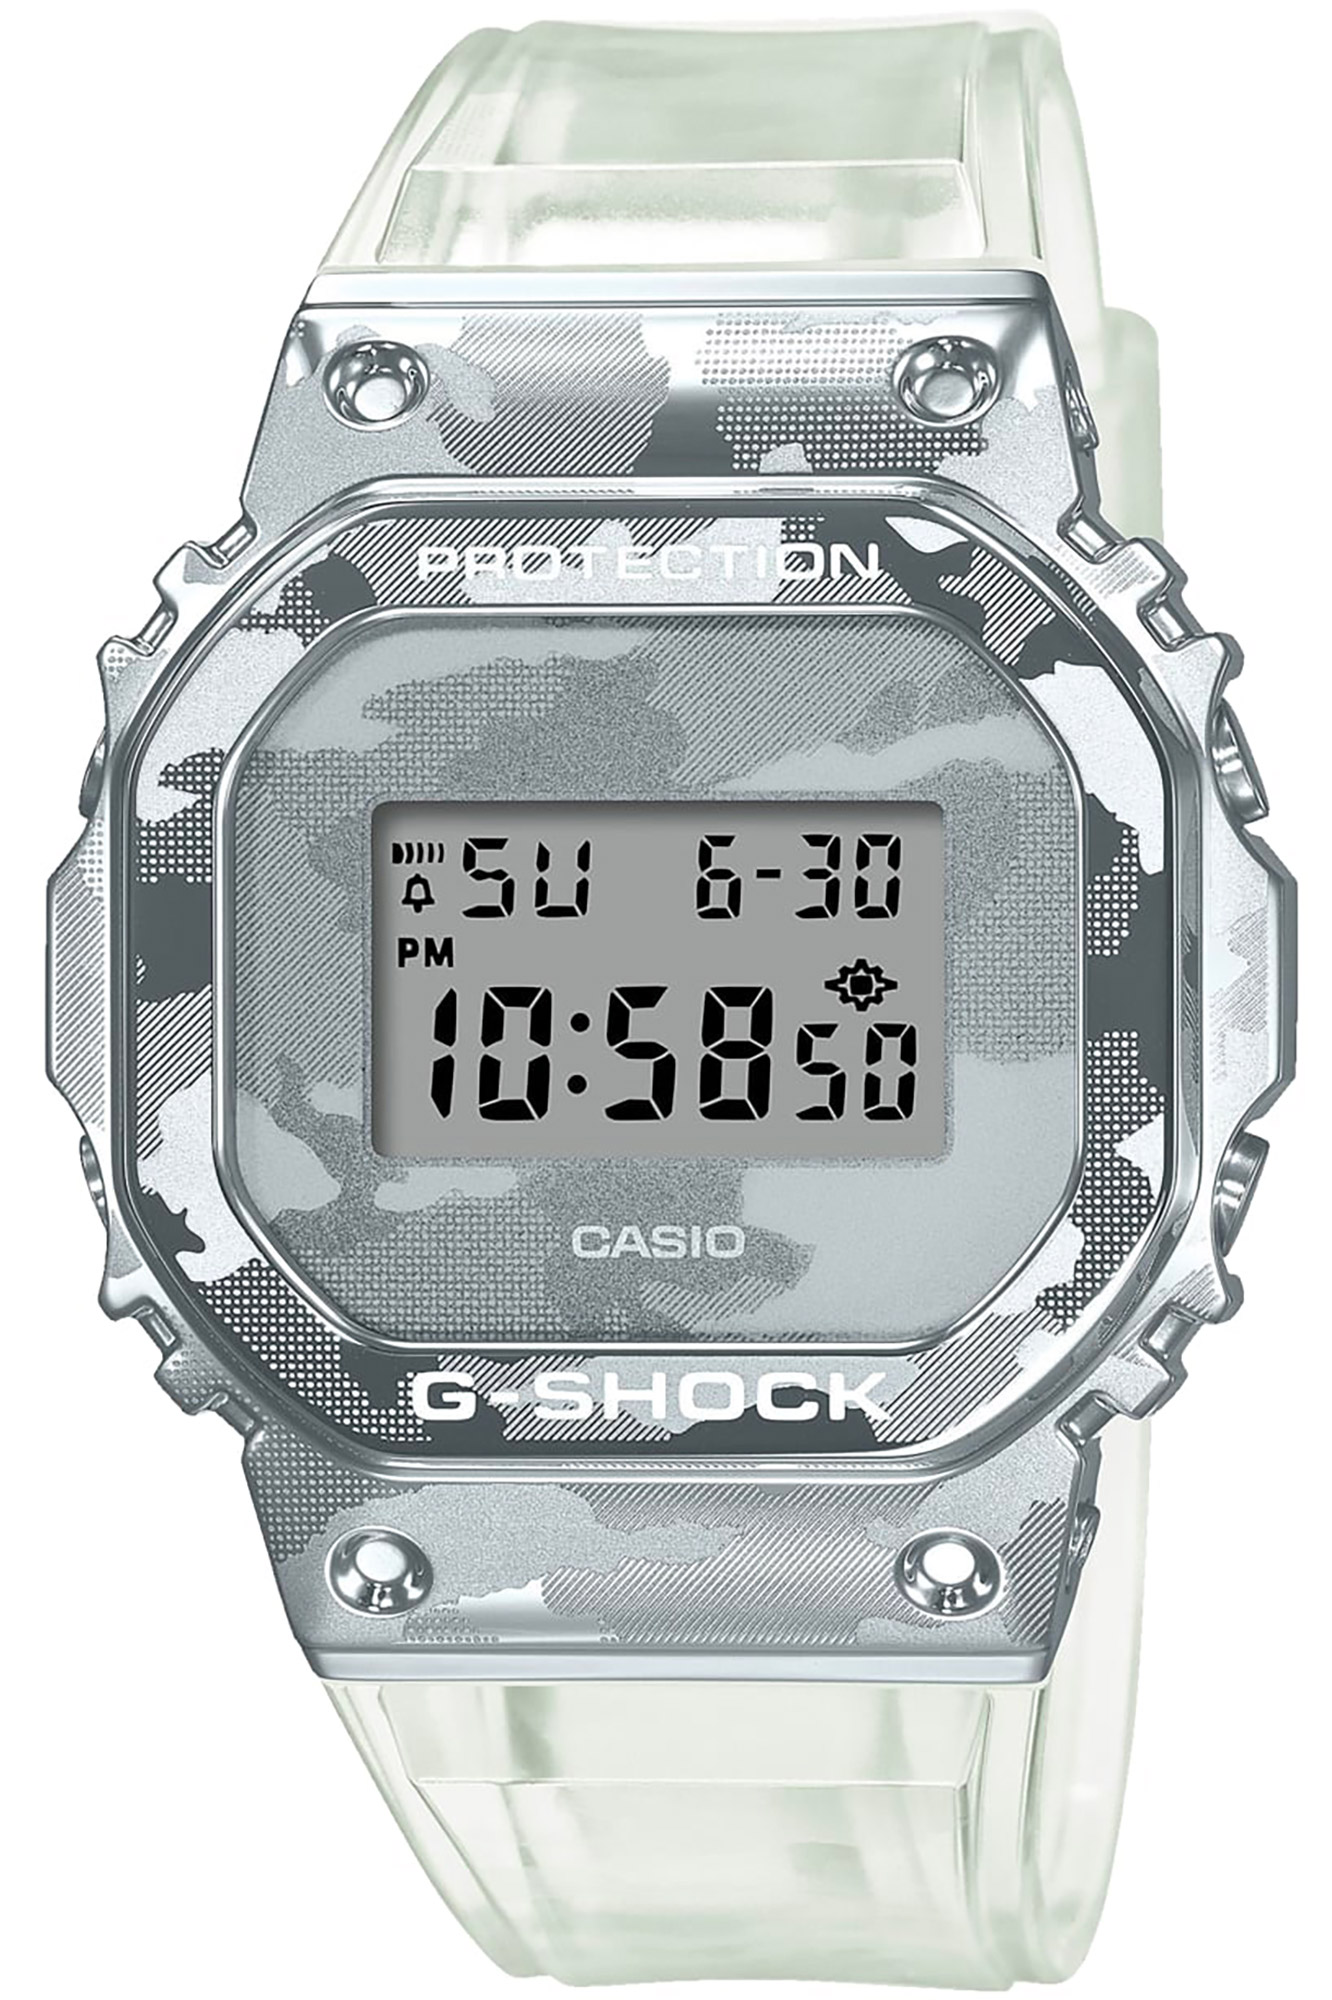 Montre CASIO G-Shock gm-5600scm-1er